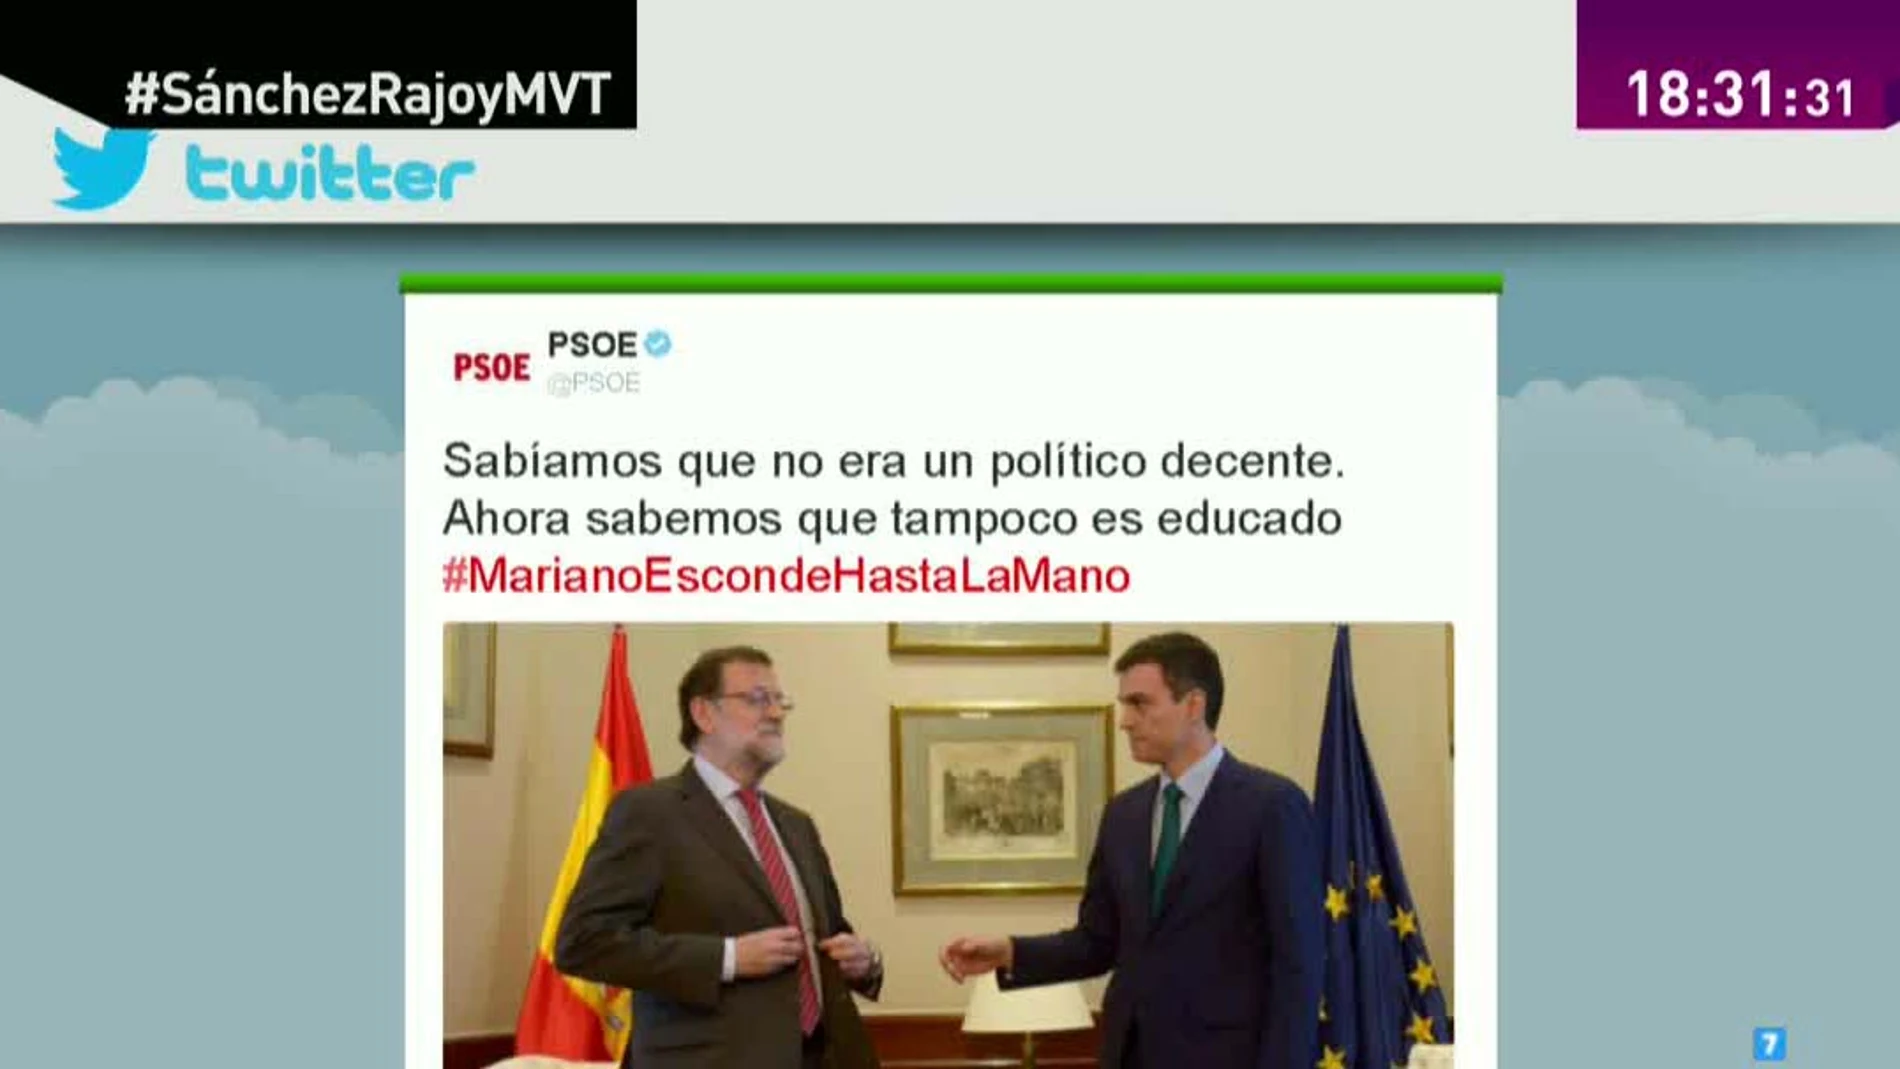 El PSOE responde a Rajoy en Twitter